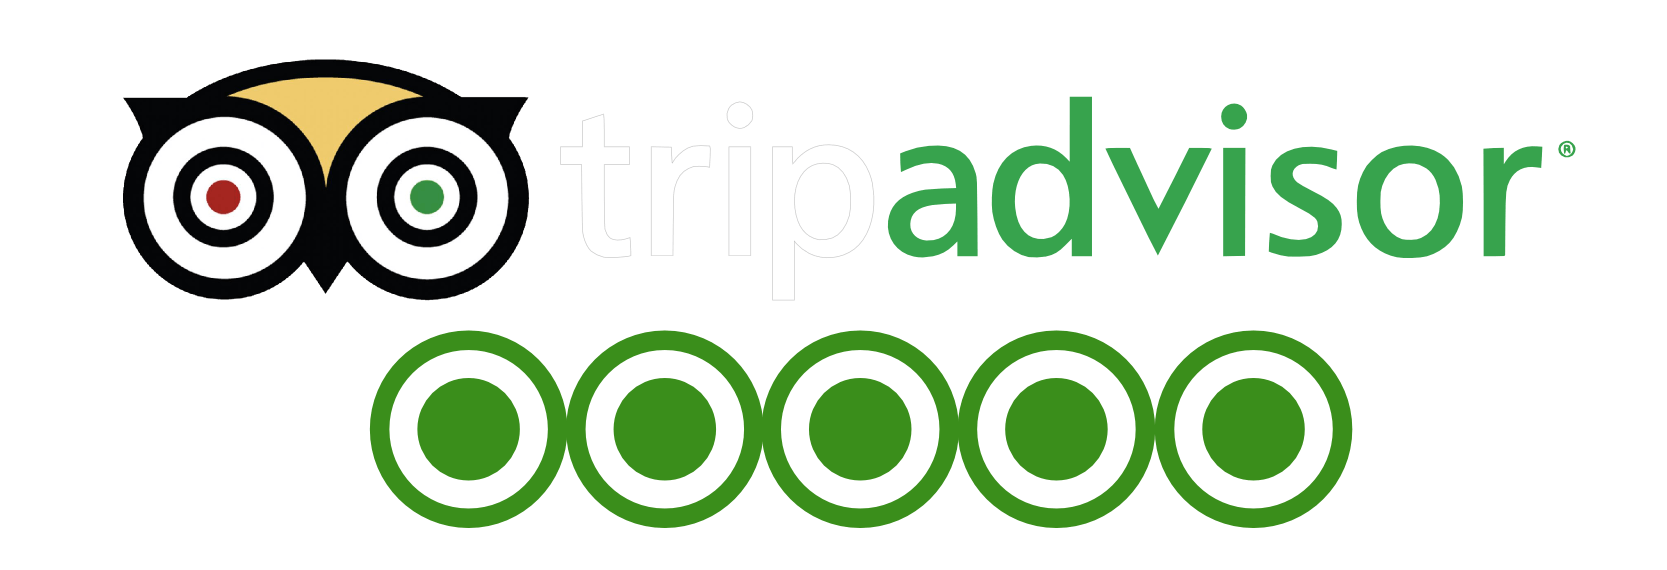 TripAdvisor Vector Logo - Free Tripadvisor Icon Vector 294543 | Download Tripadvisor Icon ...